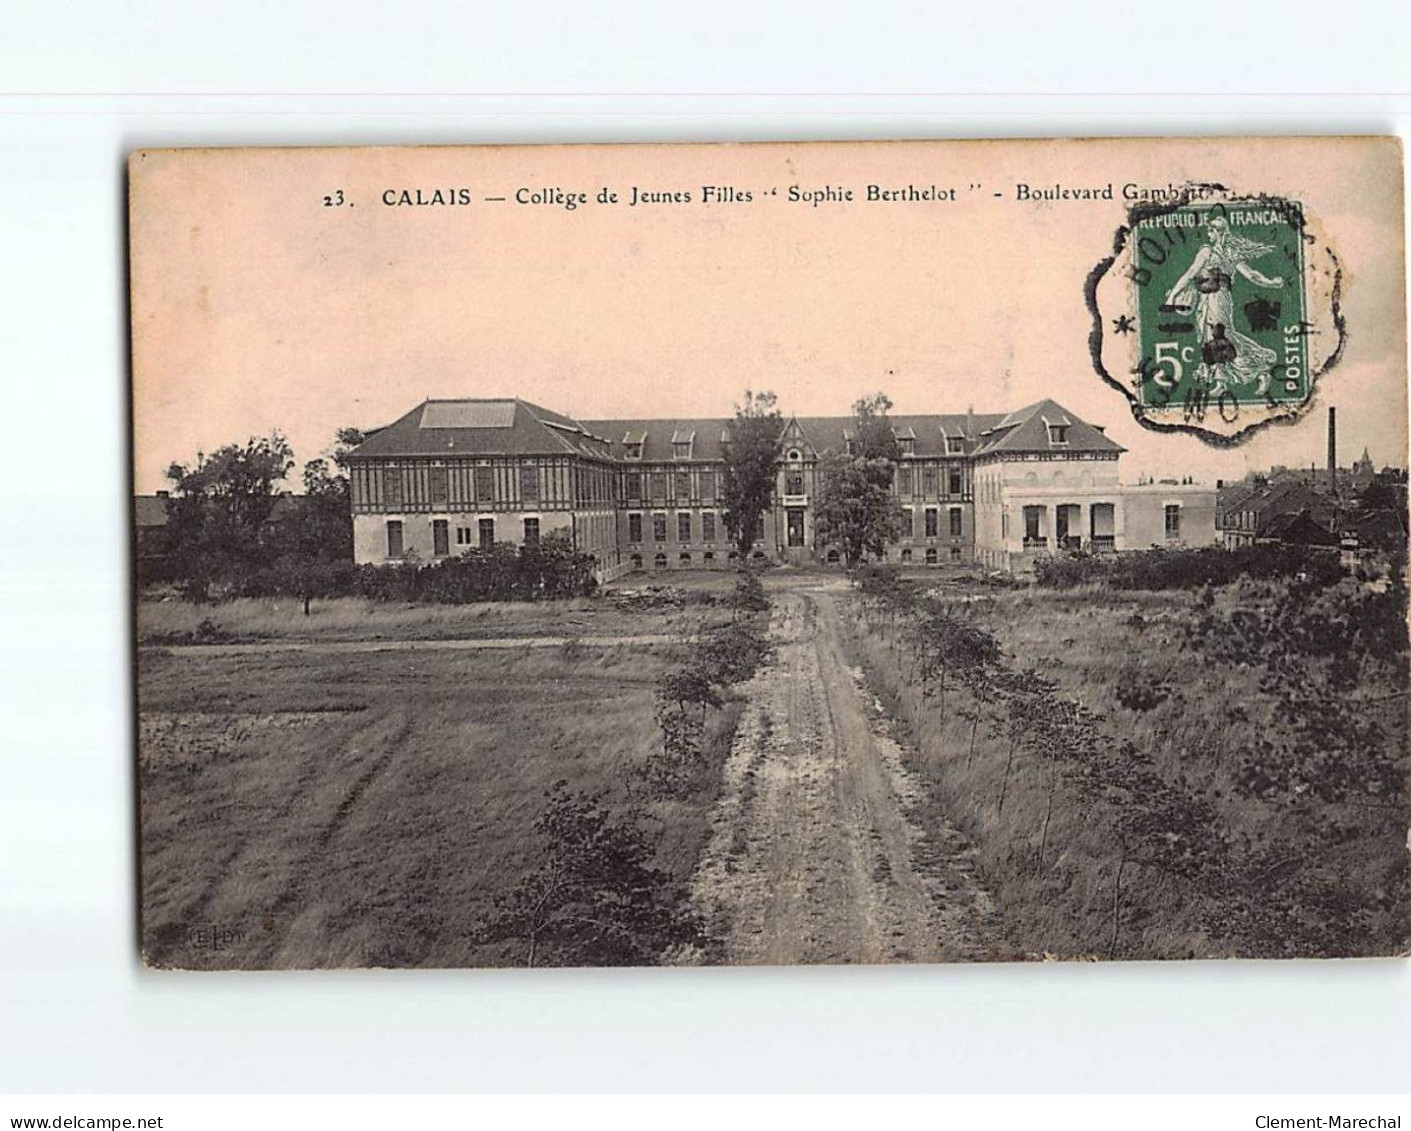 CALAIS : Collège De Jeunes Filles "Sophie Berthelot", Boulevard Gambetta - état - Calais